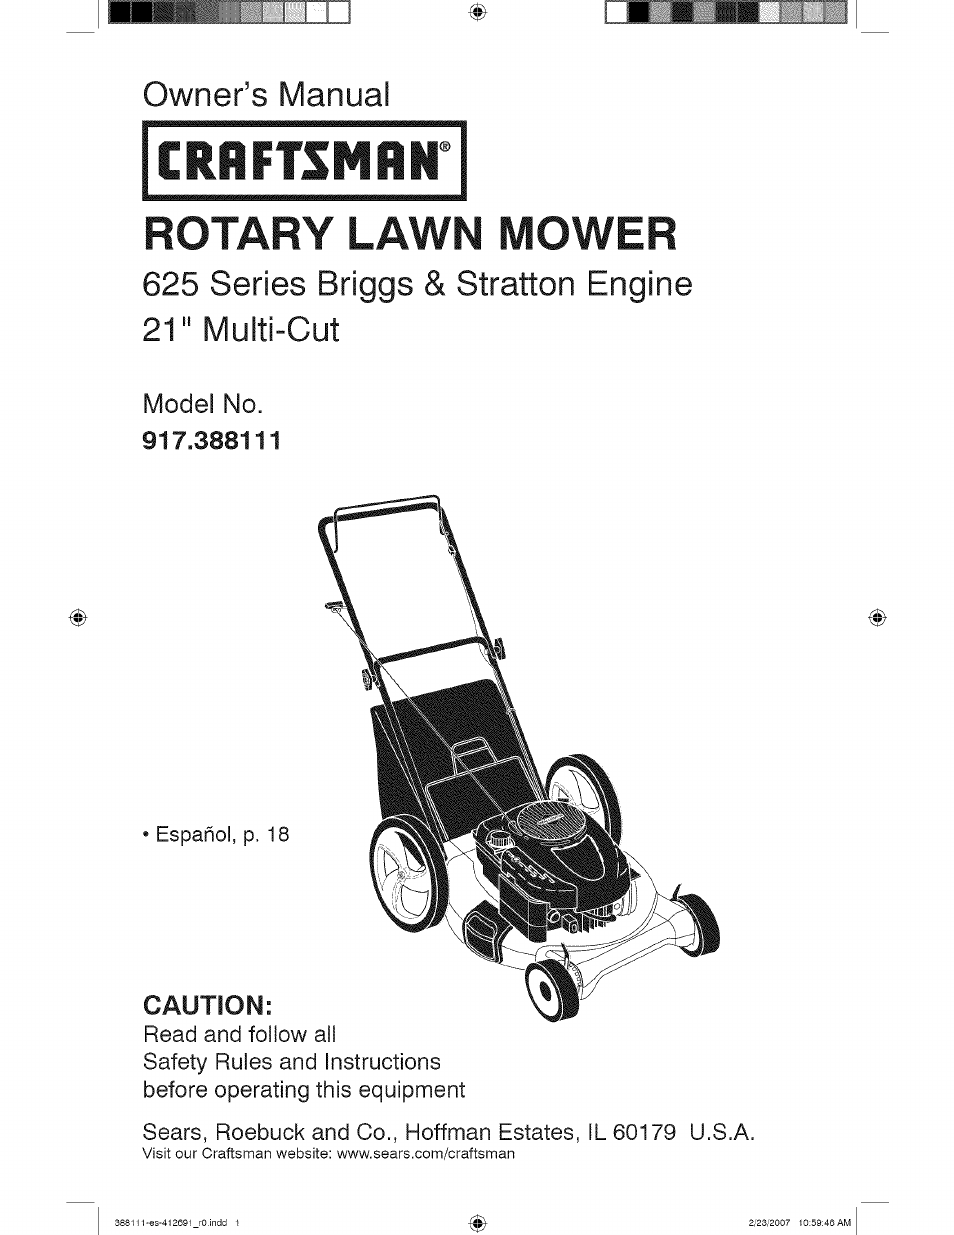 Craftsman 917.388111 User Manual | 44 pages